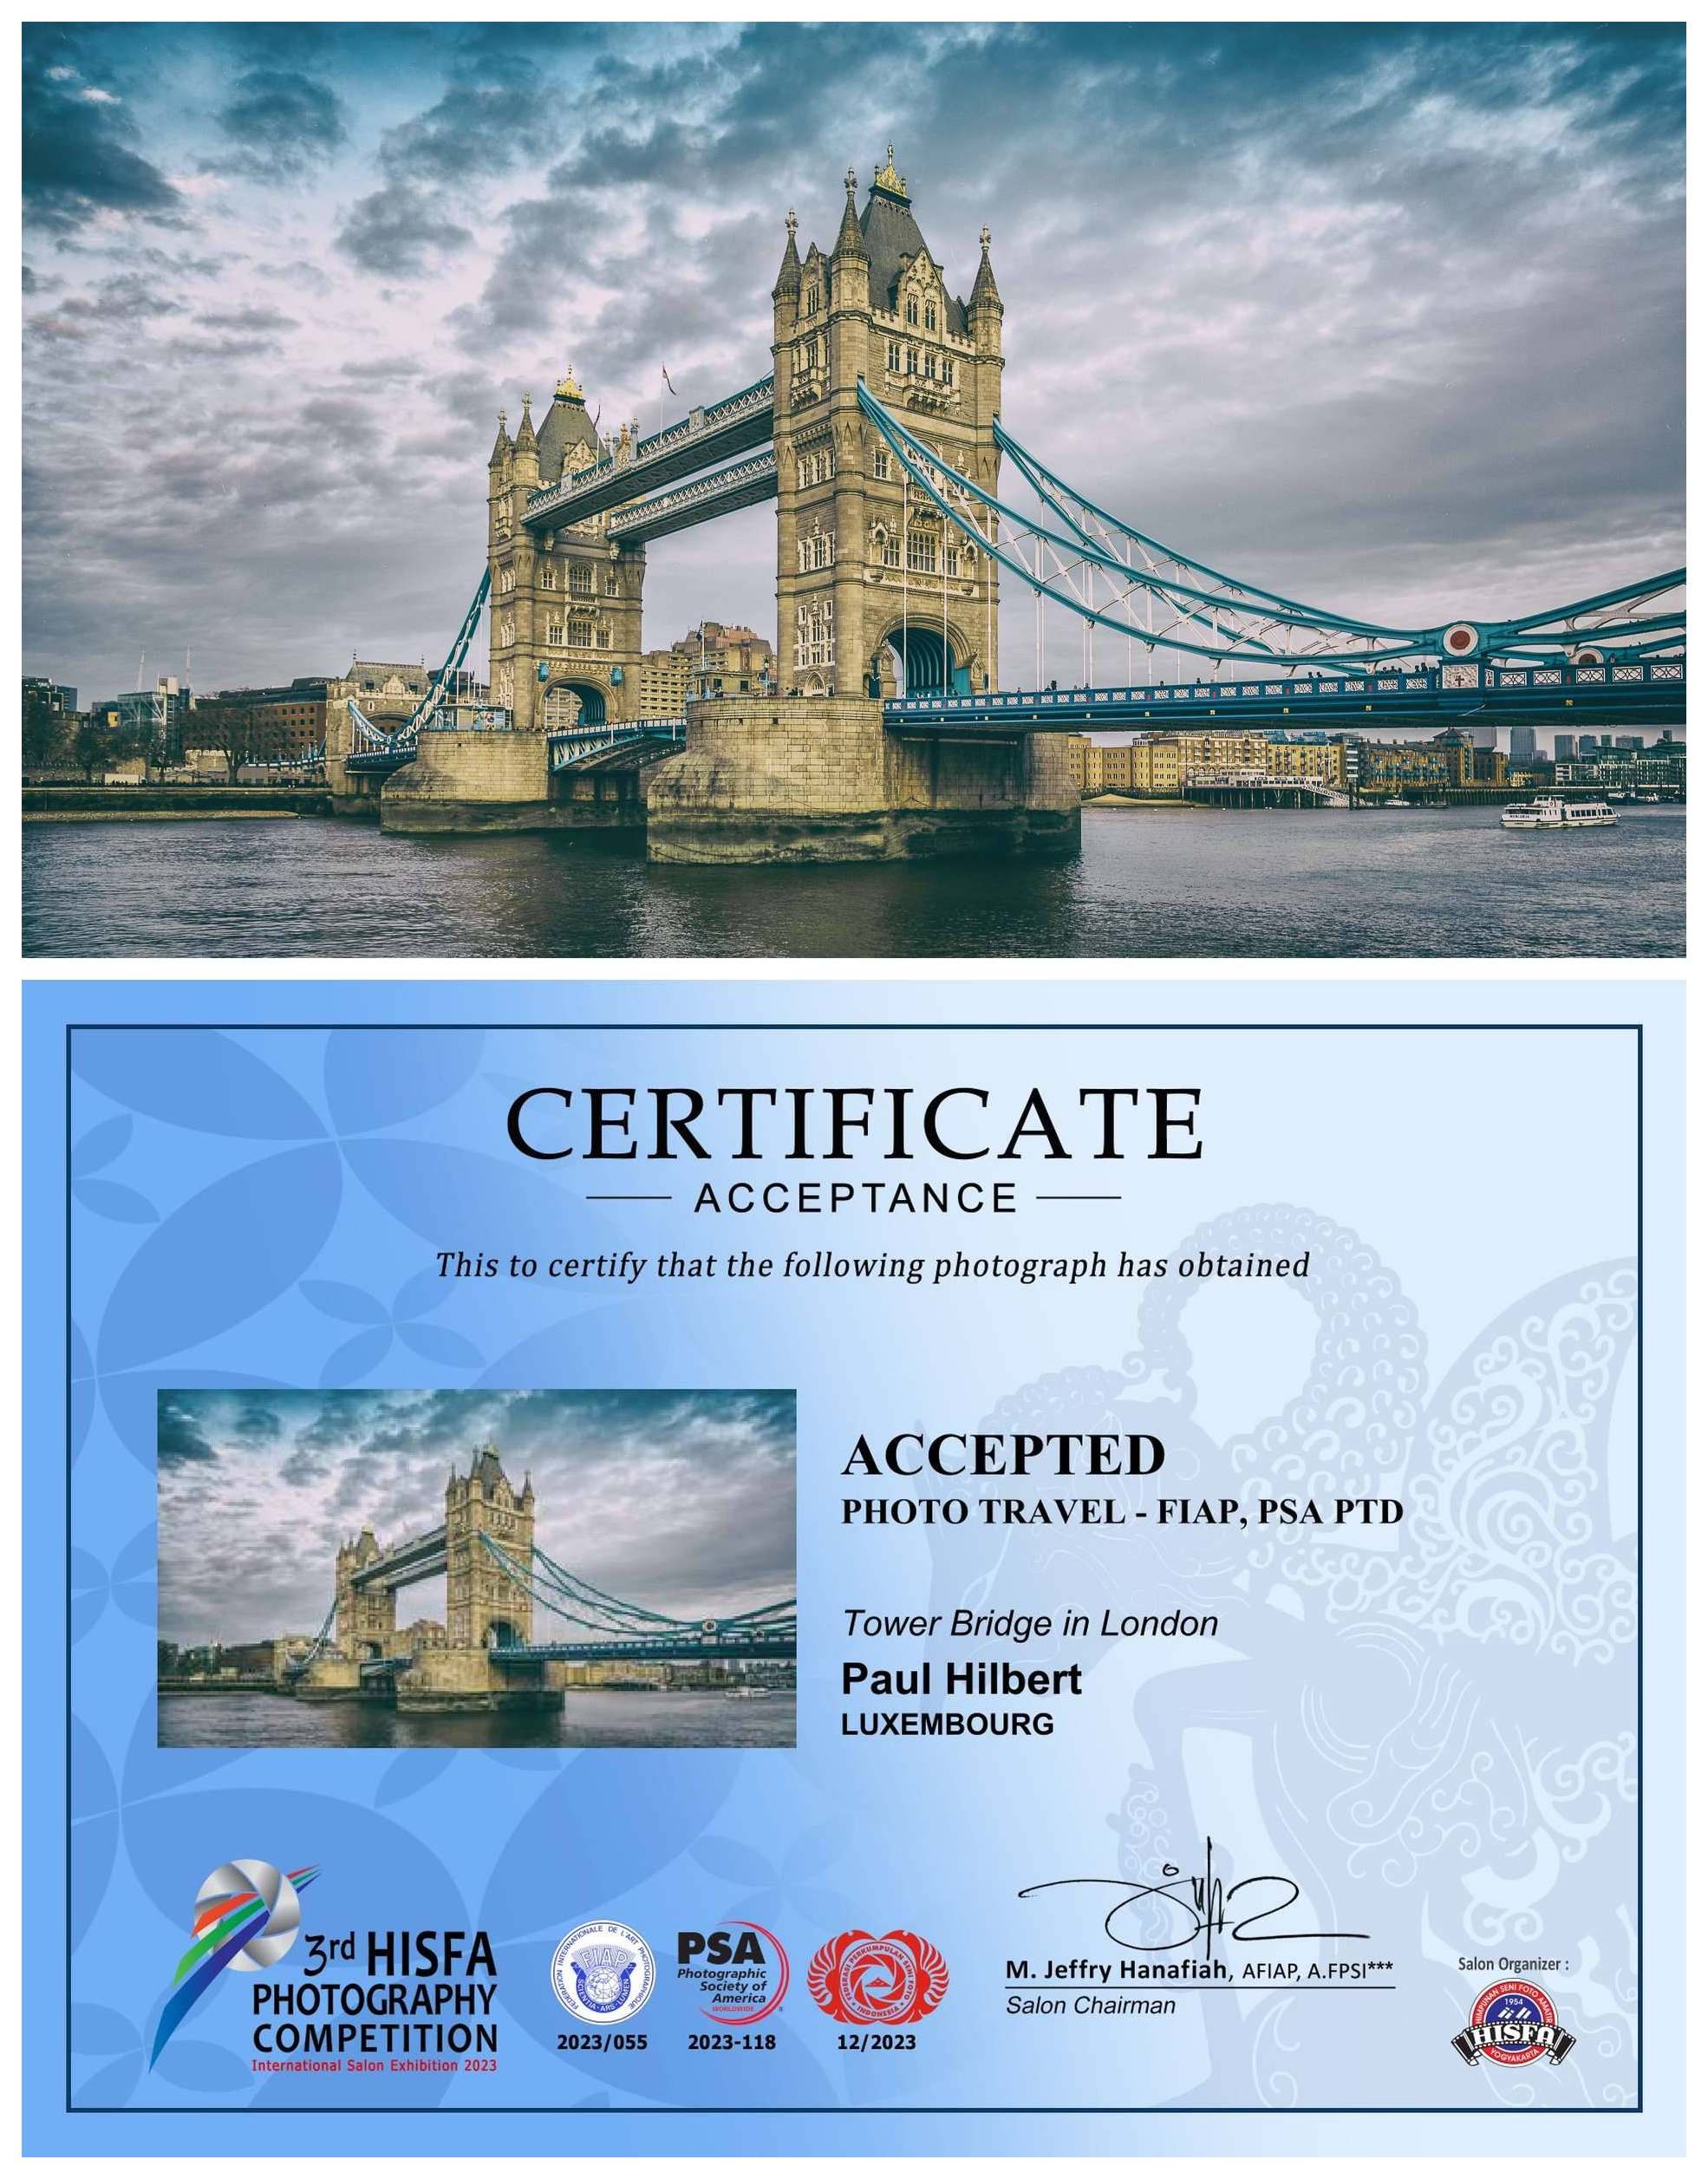 HISFA Yogyakarta Indonesia; 3rd HISFA Photography Competition; Paul Hilbert; Tower Bridge London